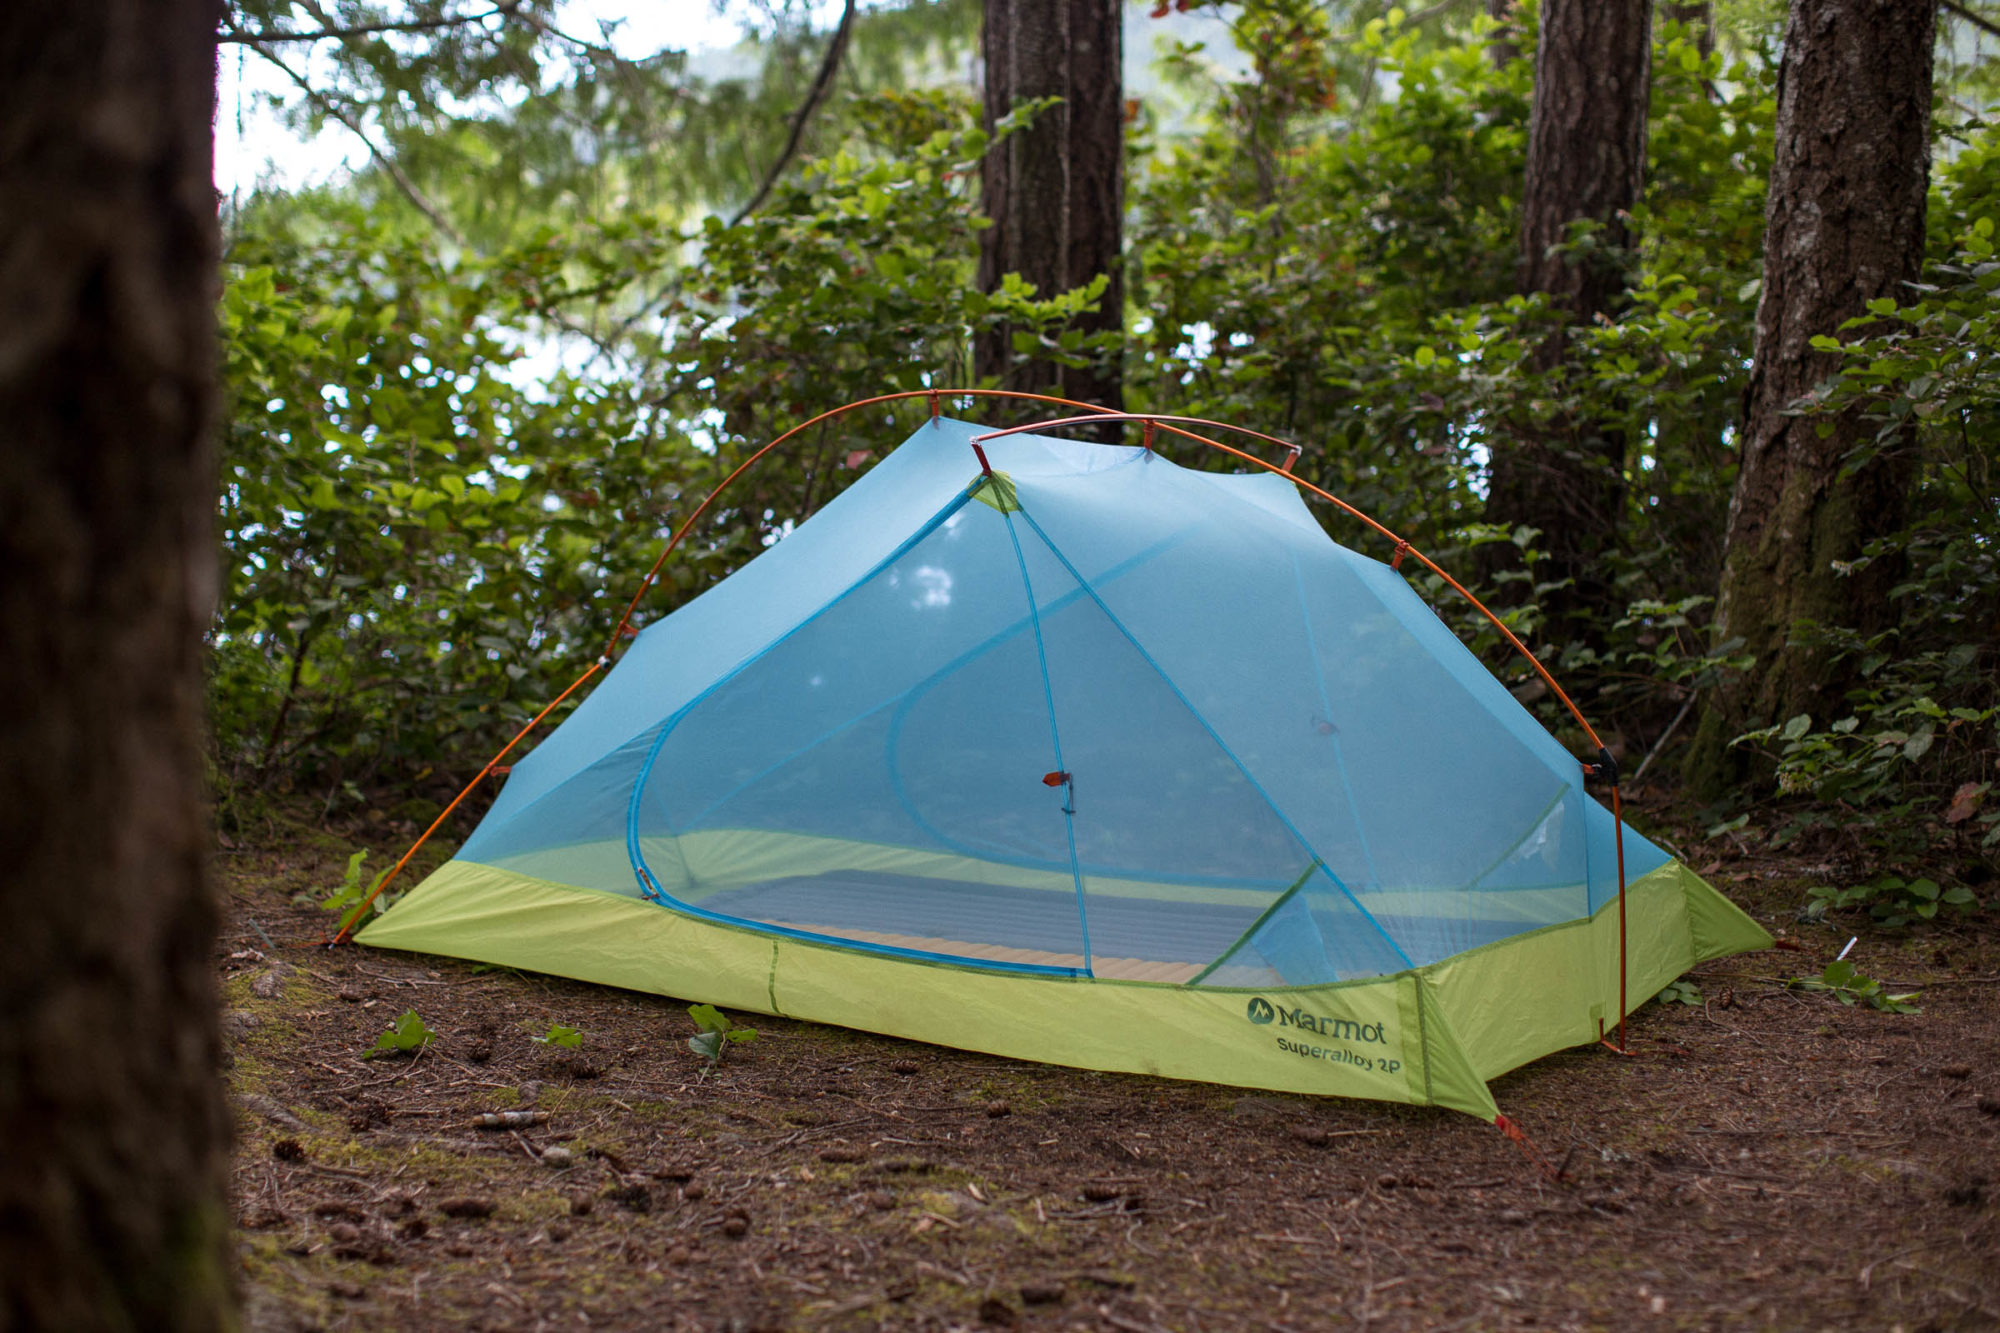 Marmot Superalloy Tent Review